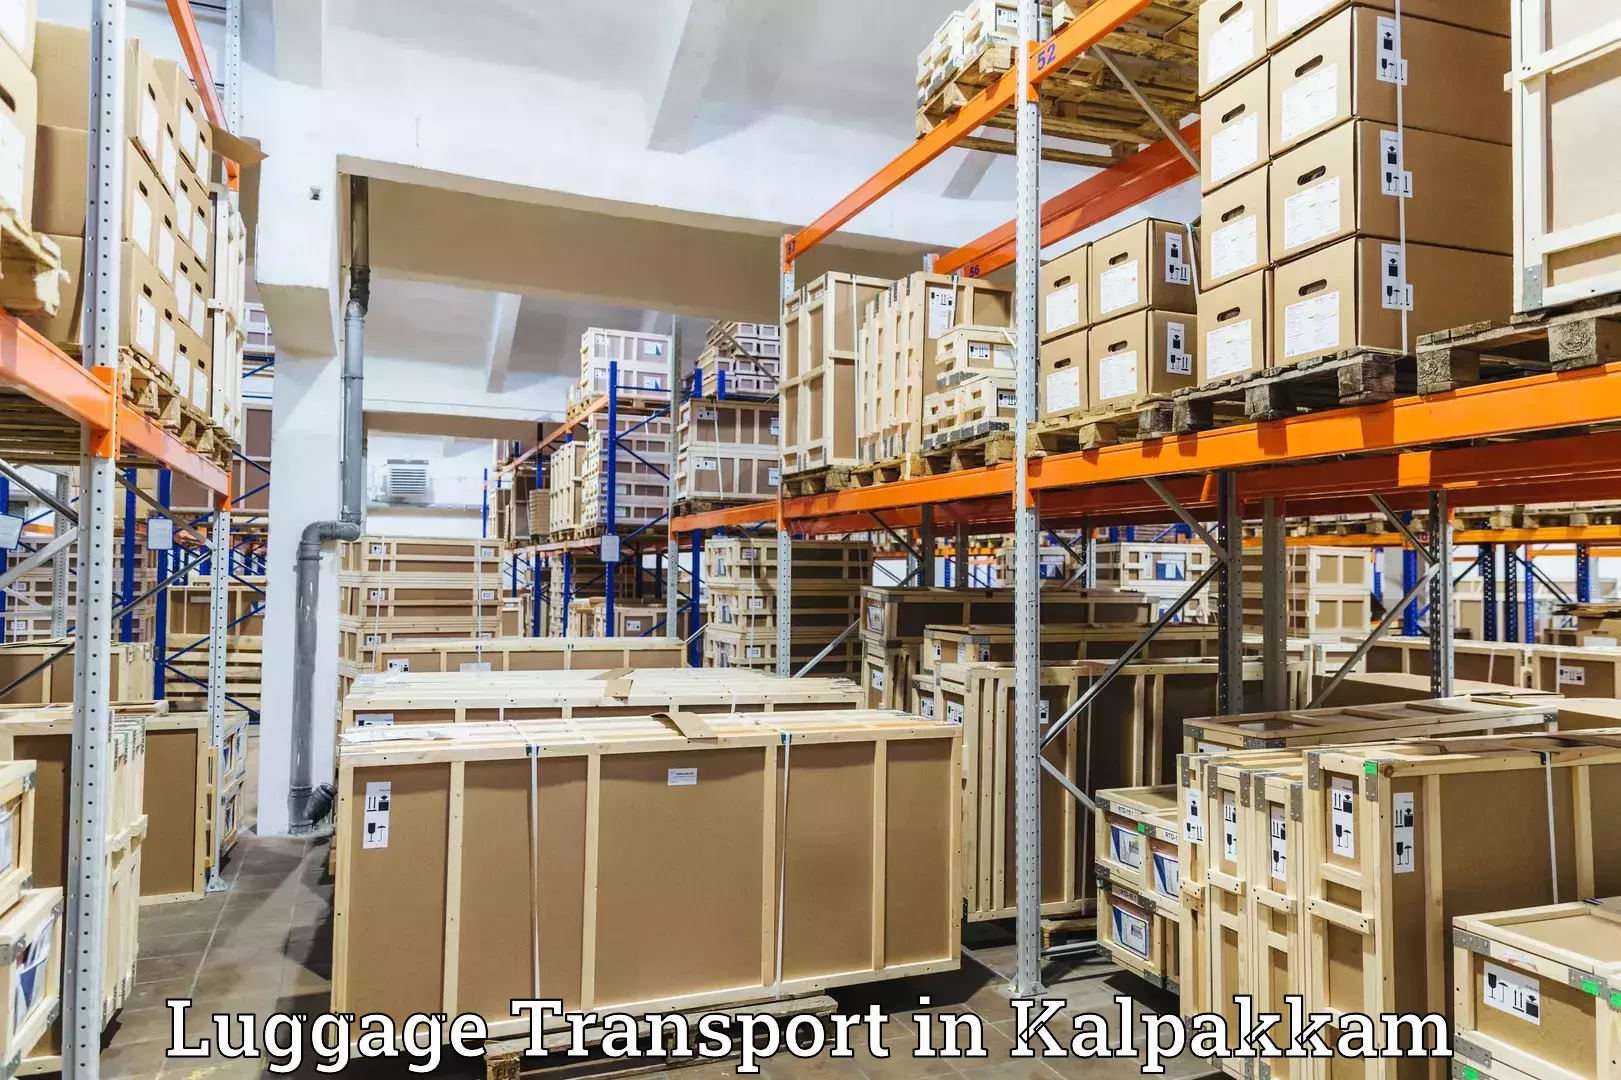 Luggage transfer service in Kalpakkam